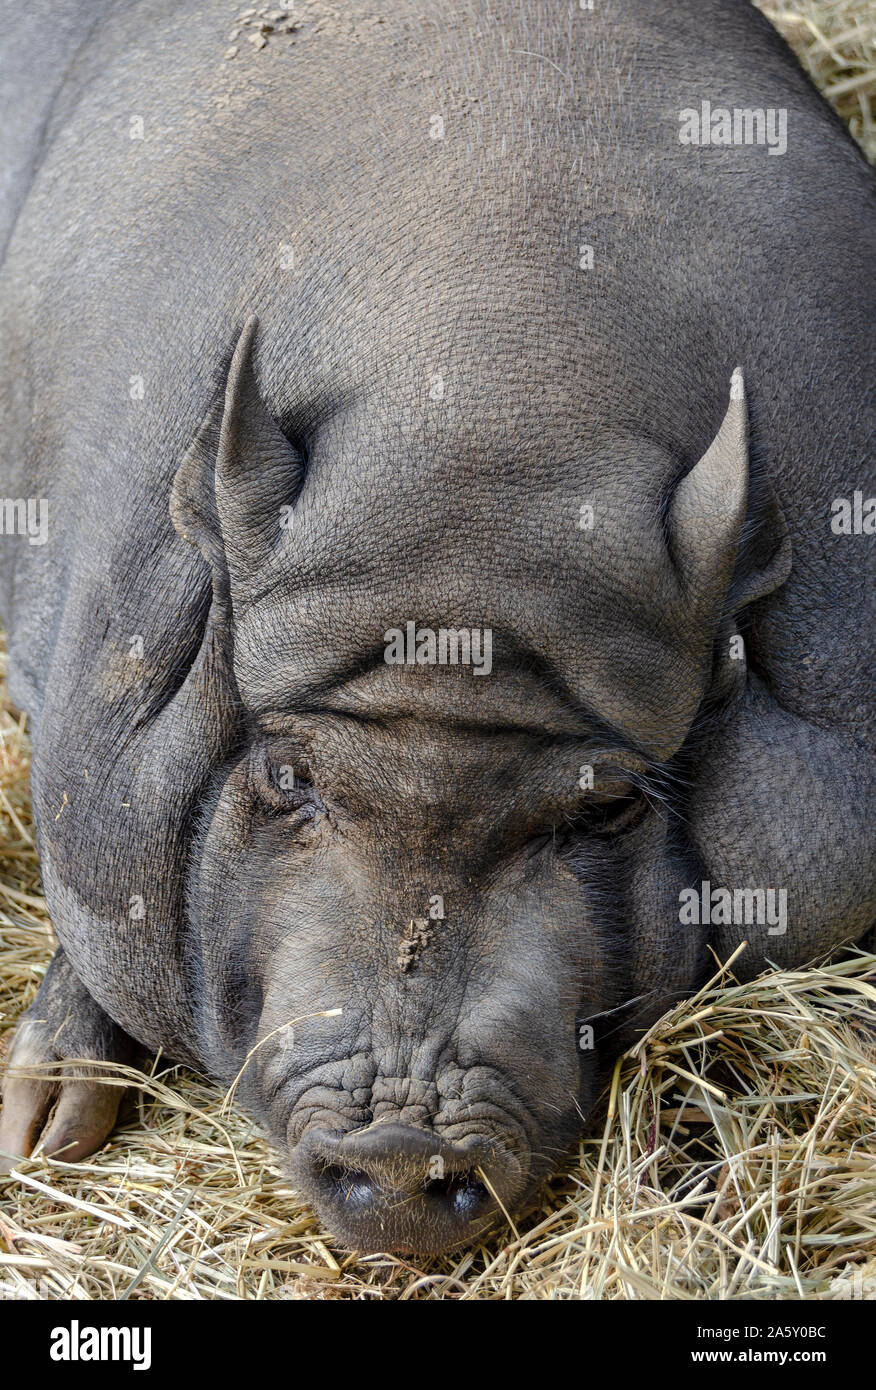 Goettinger mini pig snoozing on straw Stock Photo